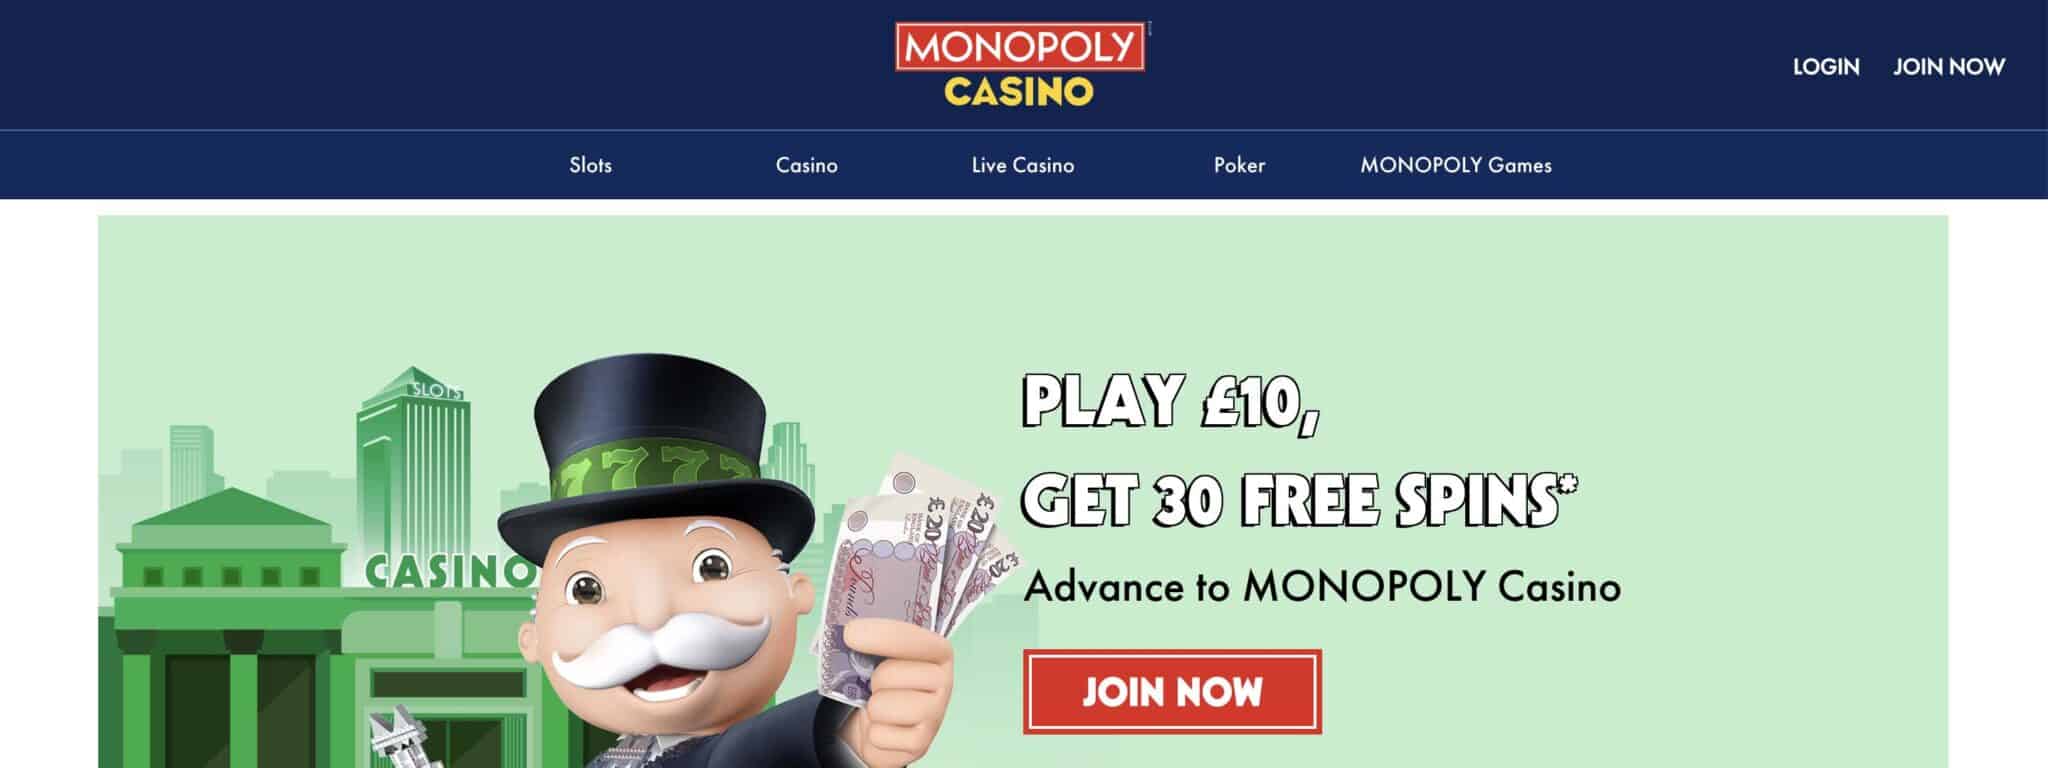 monopoly casino no deposit bonus